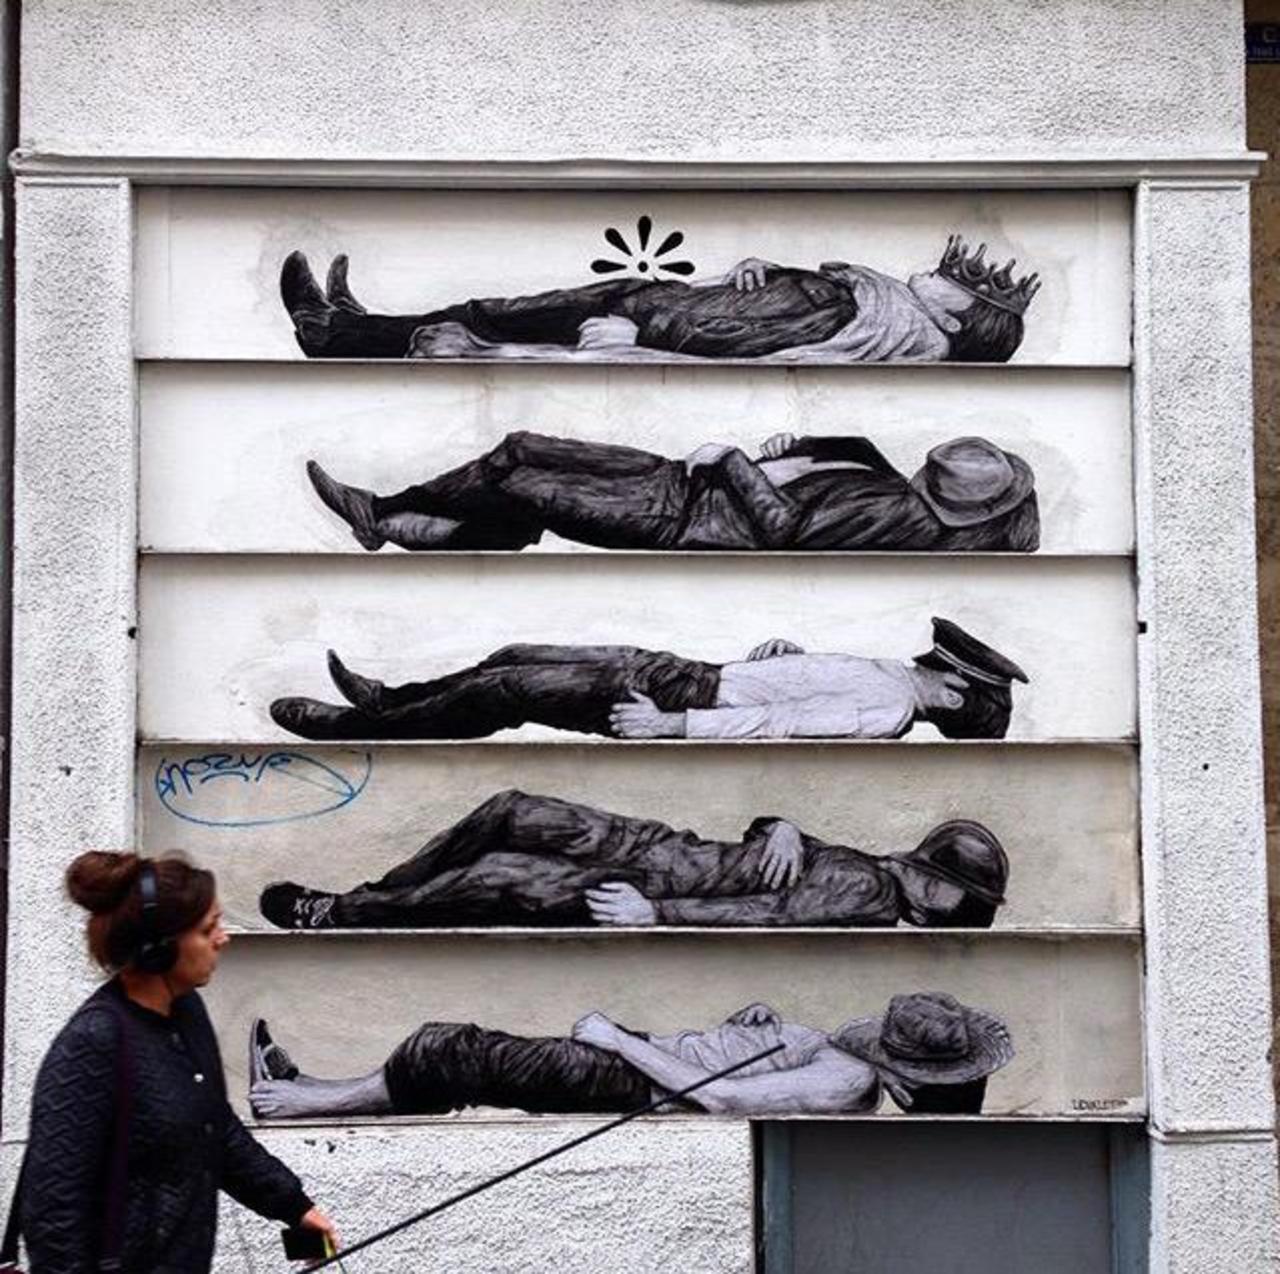 RT @jerome_coumet: Levalet 
L'ordre des choses - Paris XIX
#art #mural #graffiti #streetart http://t.co/A5gtv3sNxa
Via @GoogleStreetArt